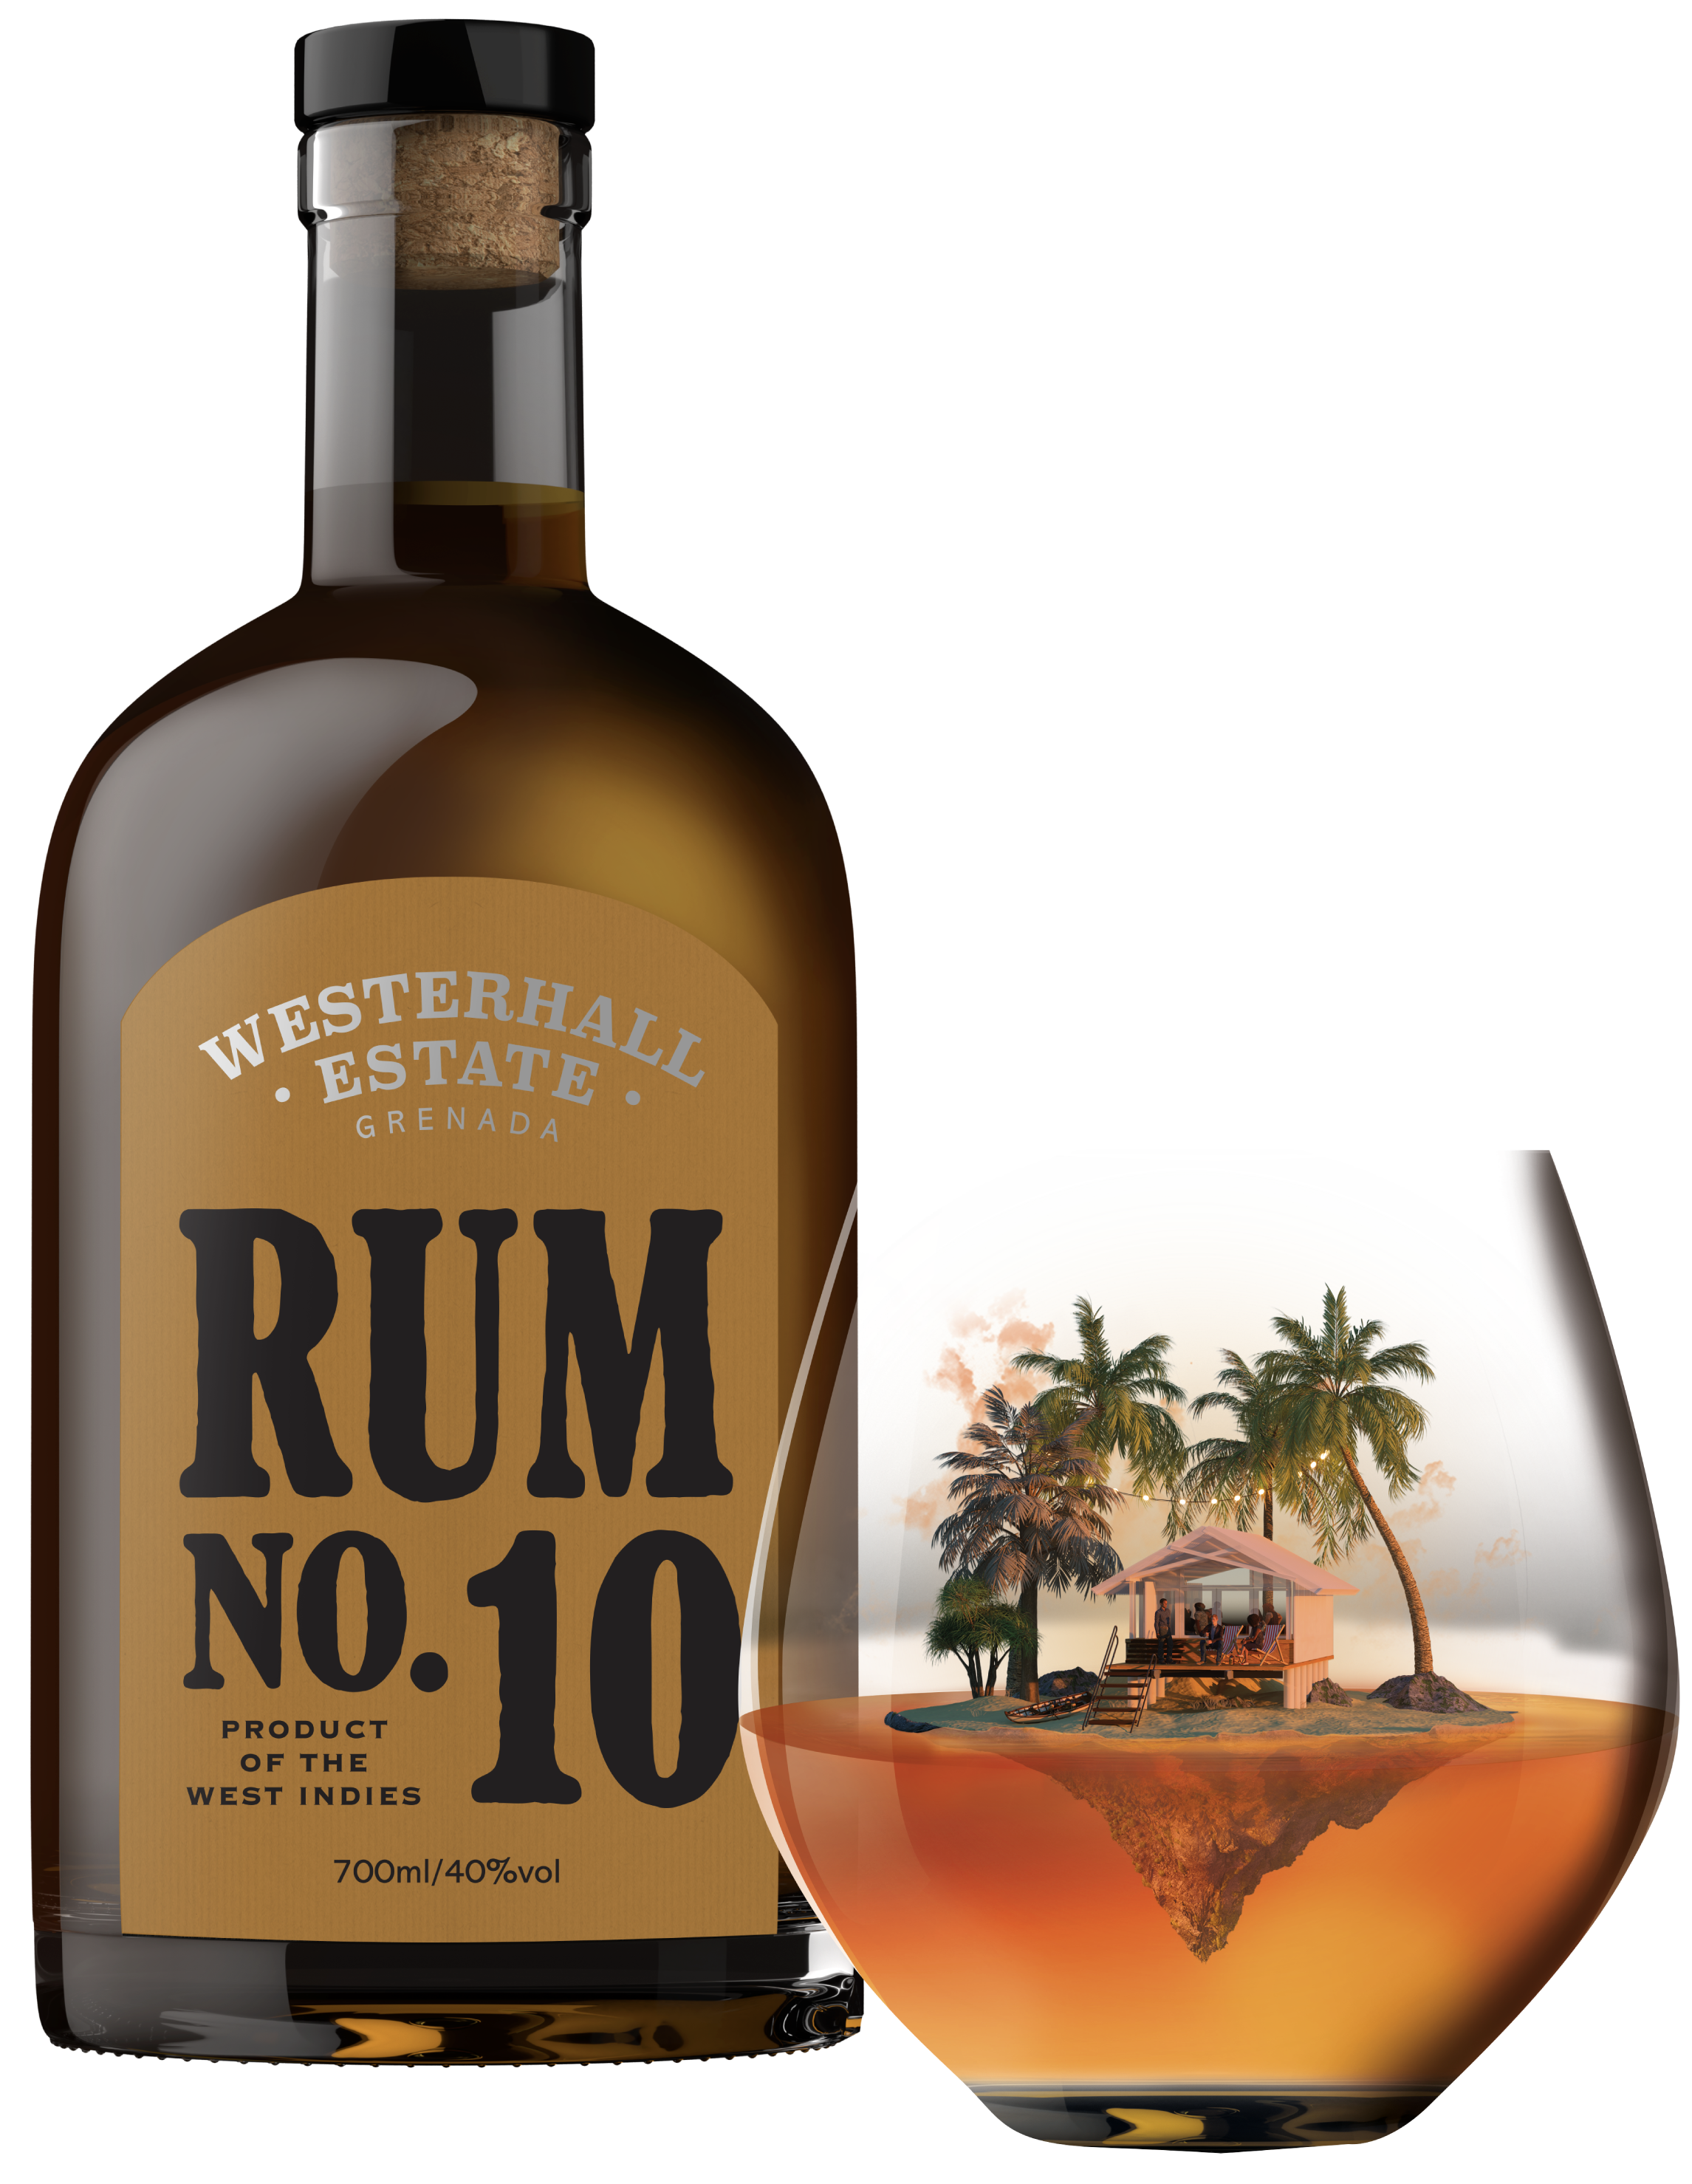 Rum NO.10